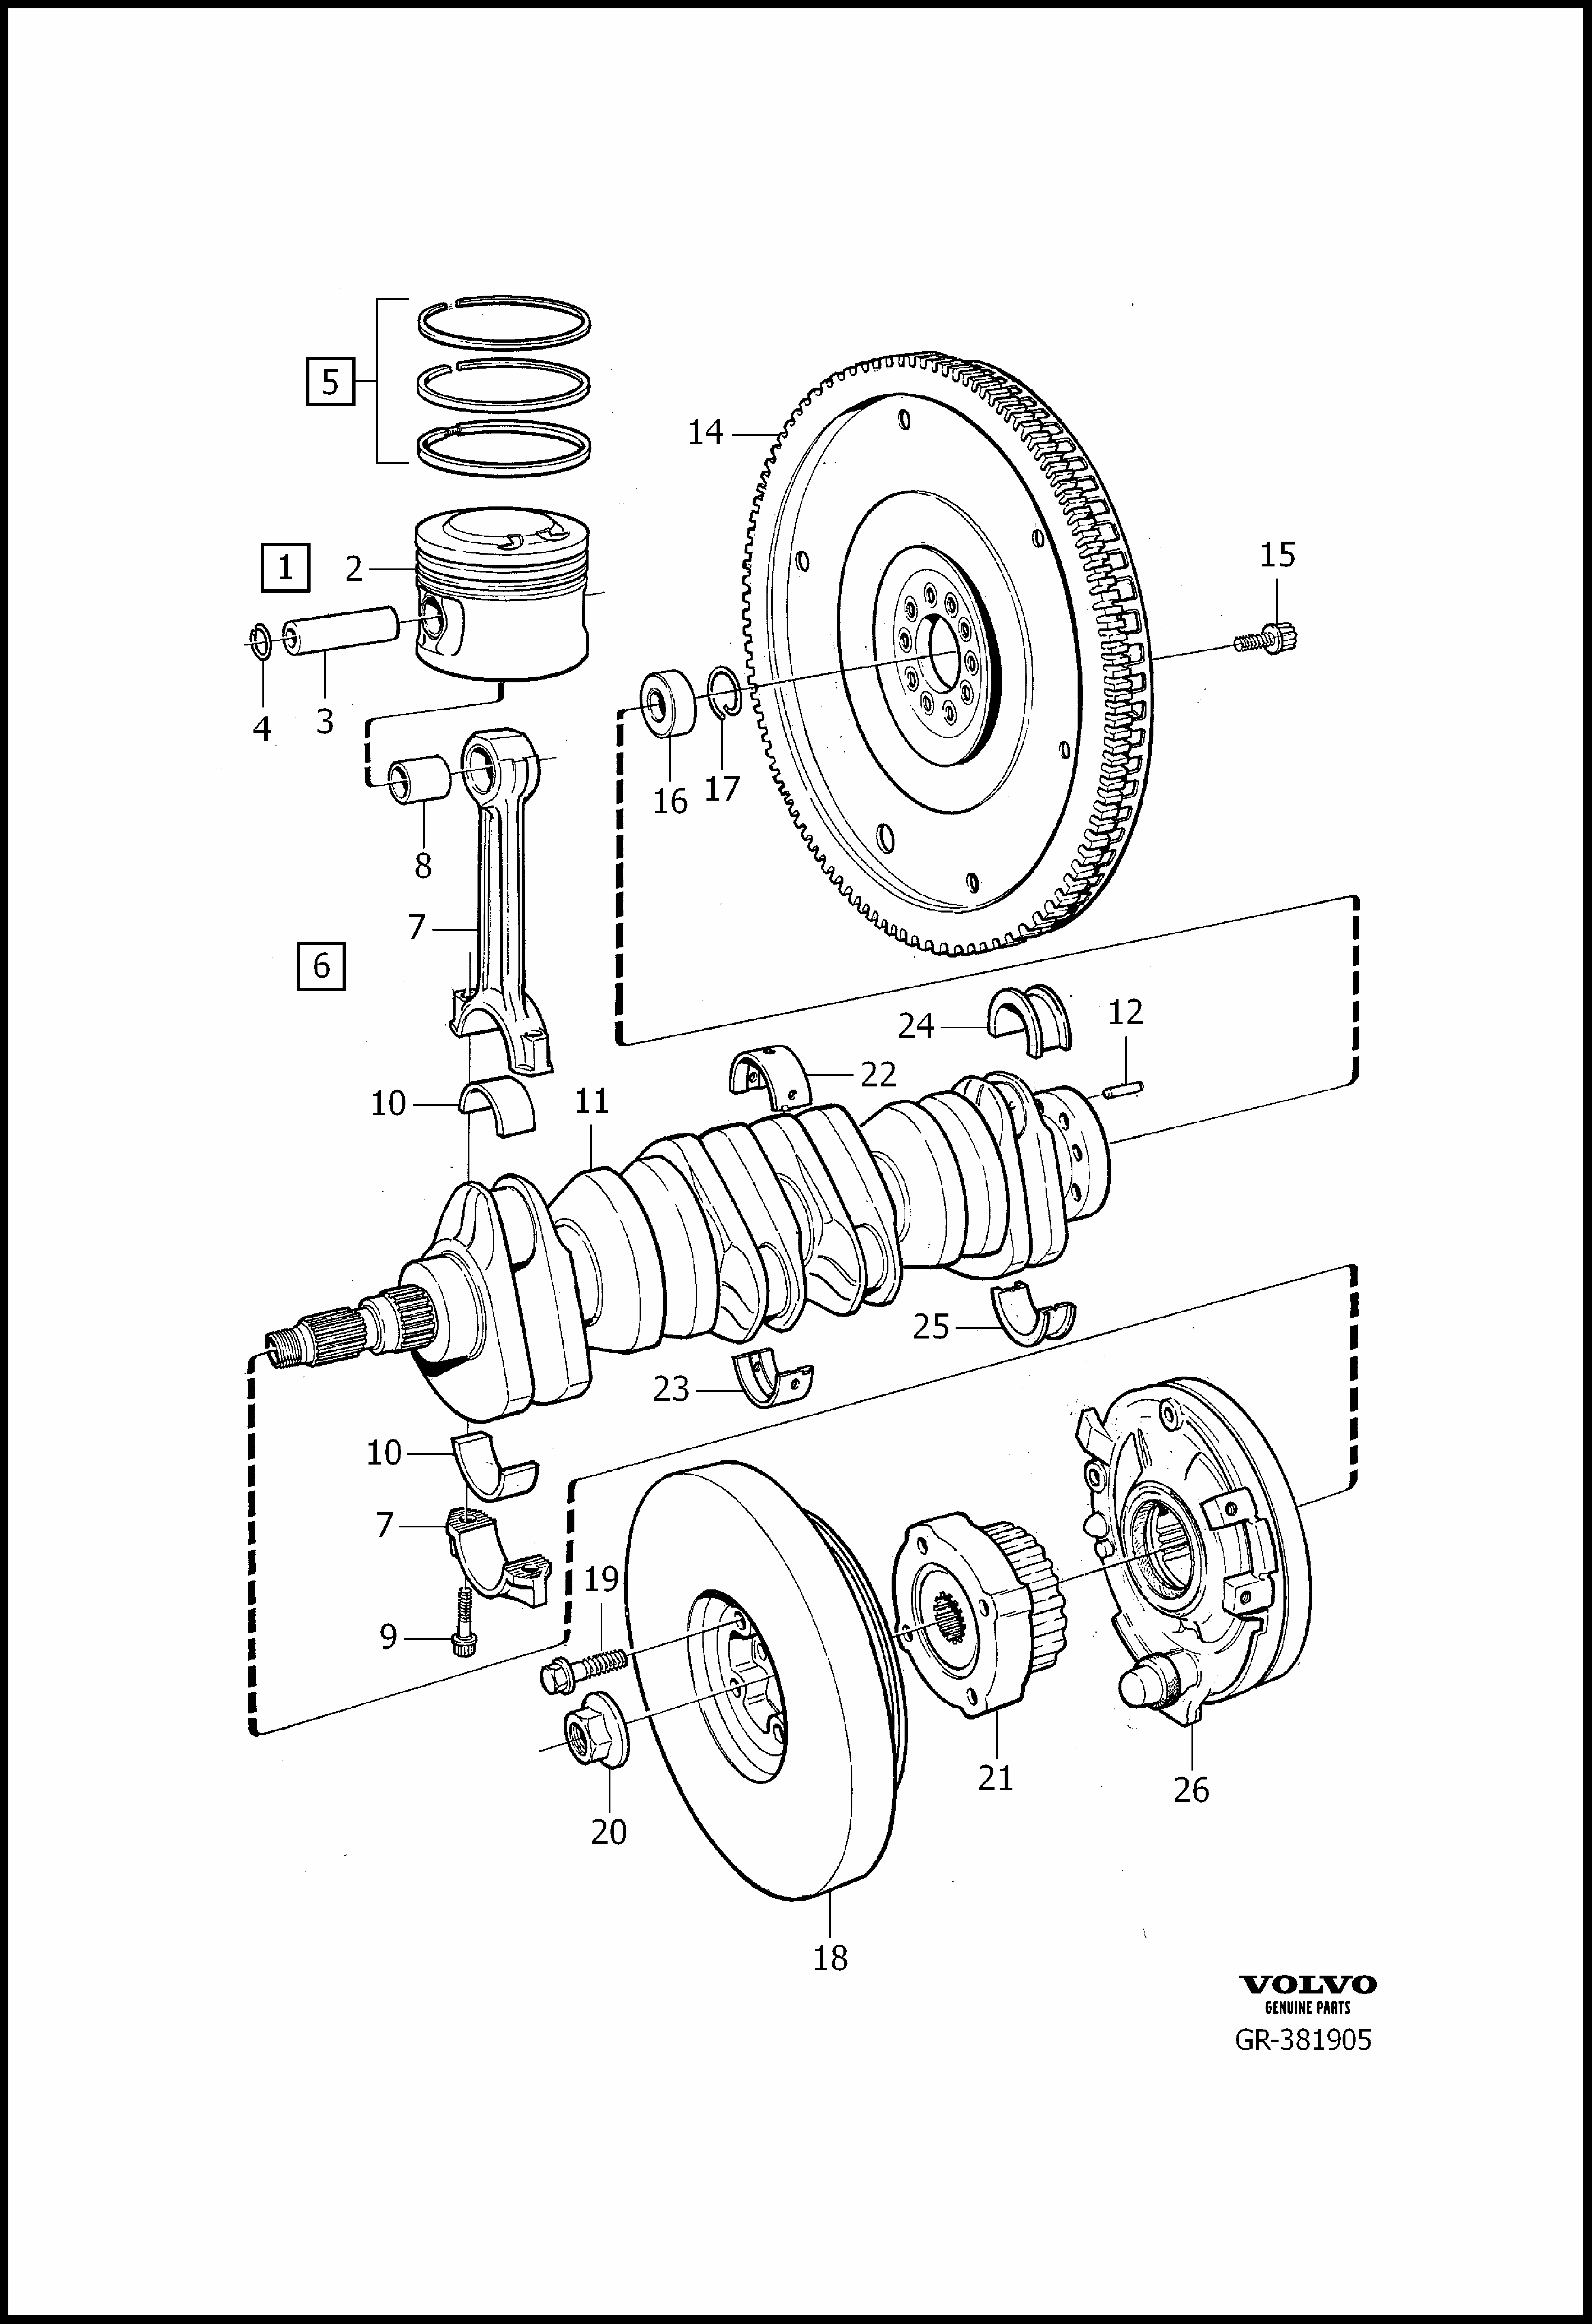 crank mechanism pour Volvo 960 960